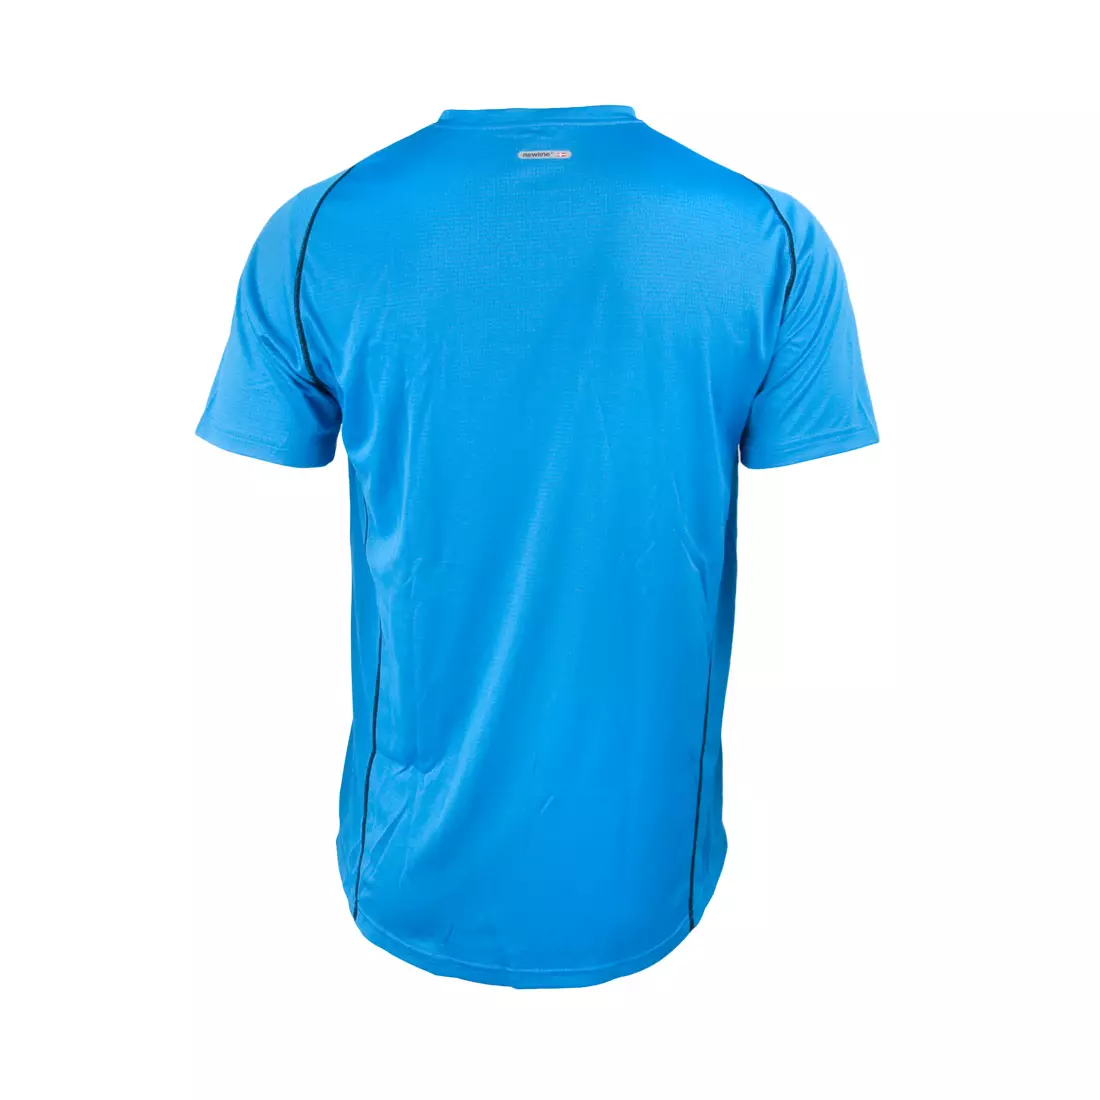 NEWLINE BASE COOLMAX TEE - pánské běžecké tričko 14603-016